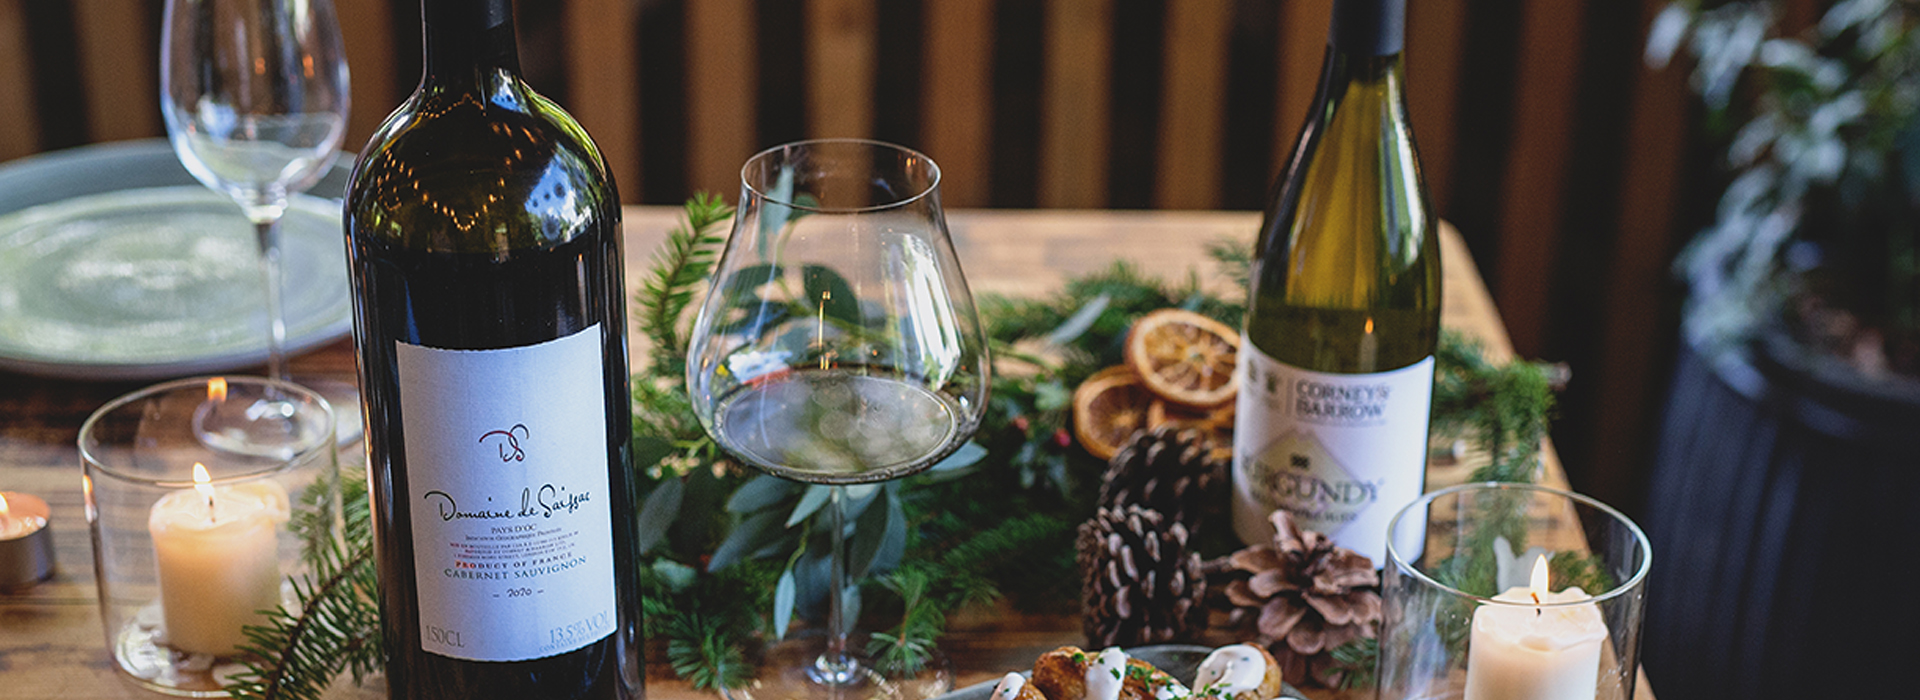 Christmas Food & Wine Pairings: Cabernet Sauvignon Domaine De Saissac, Igp Pays D’oc 2020 Magnum with Roast Turkey & Hasselback potatoes